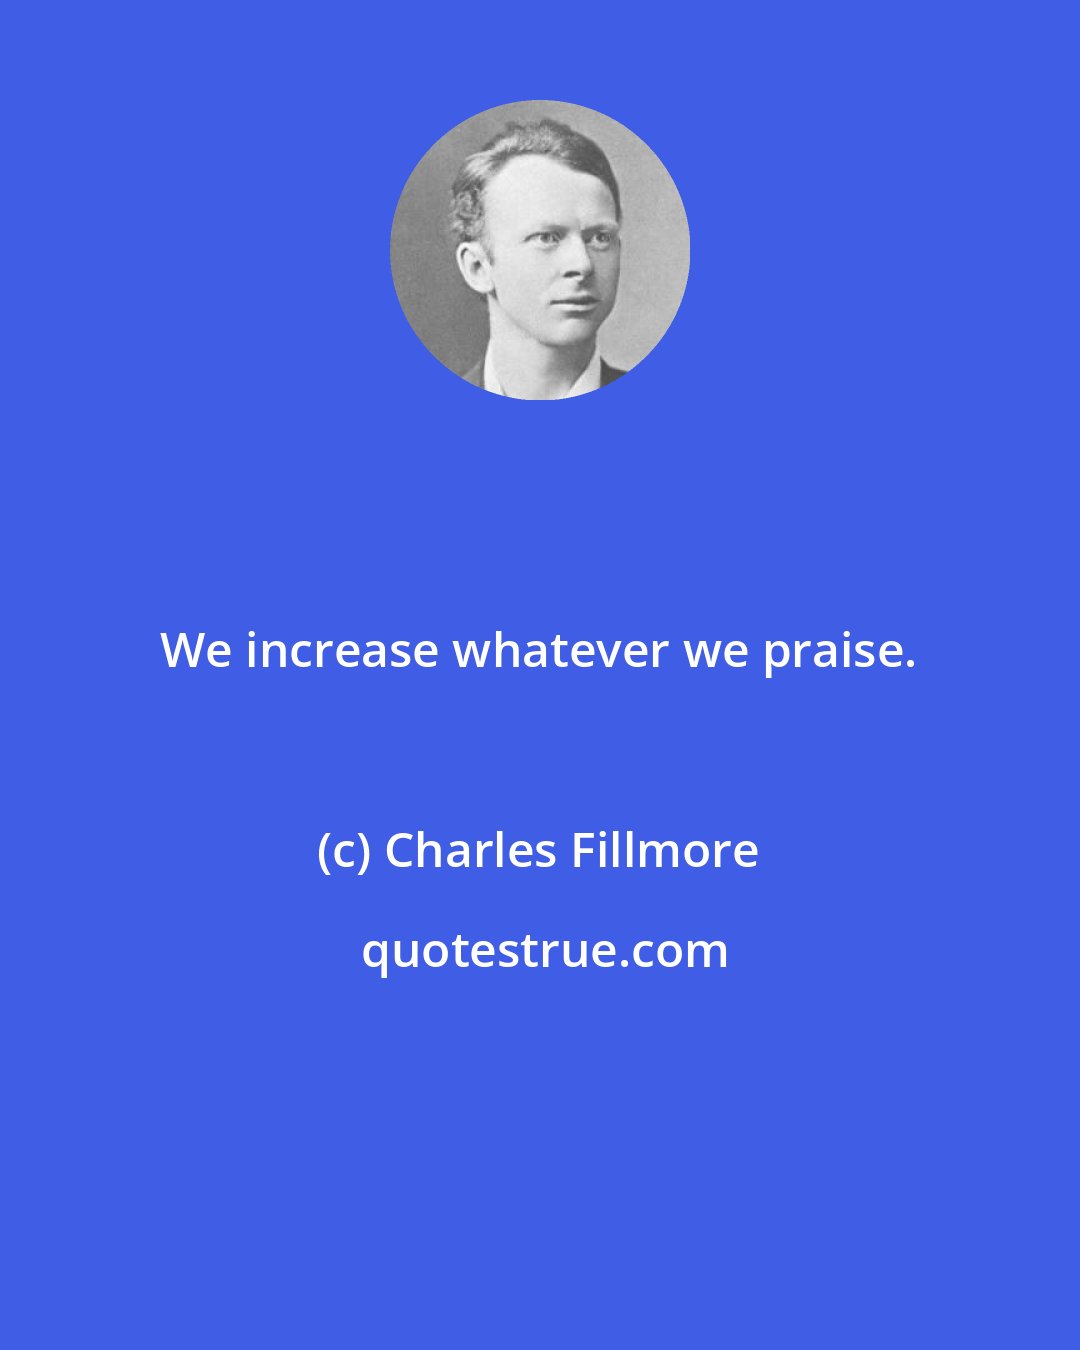 Charles Fillmore: We increase whatever we praise.